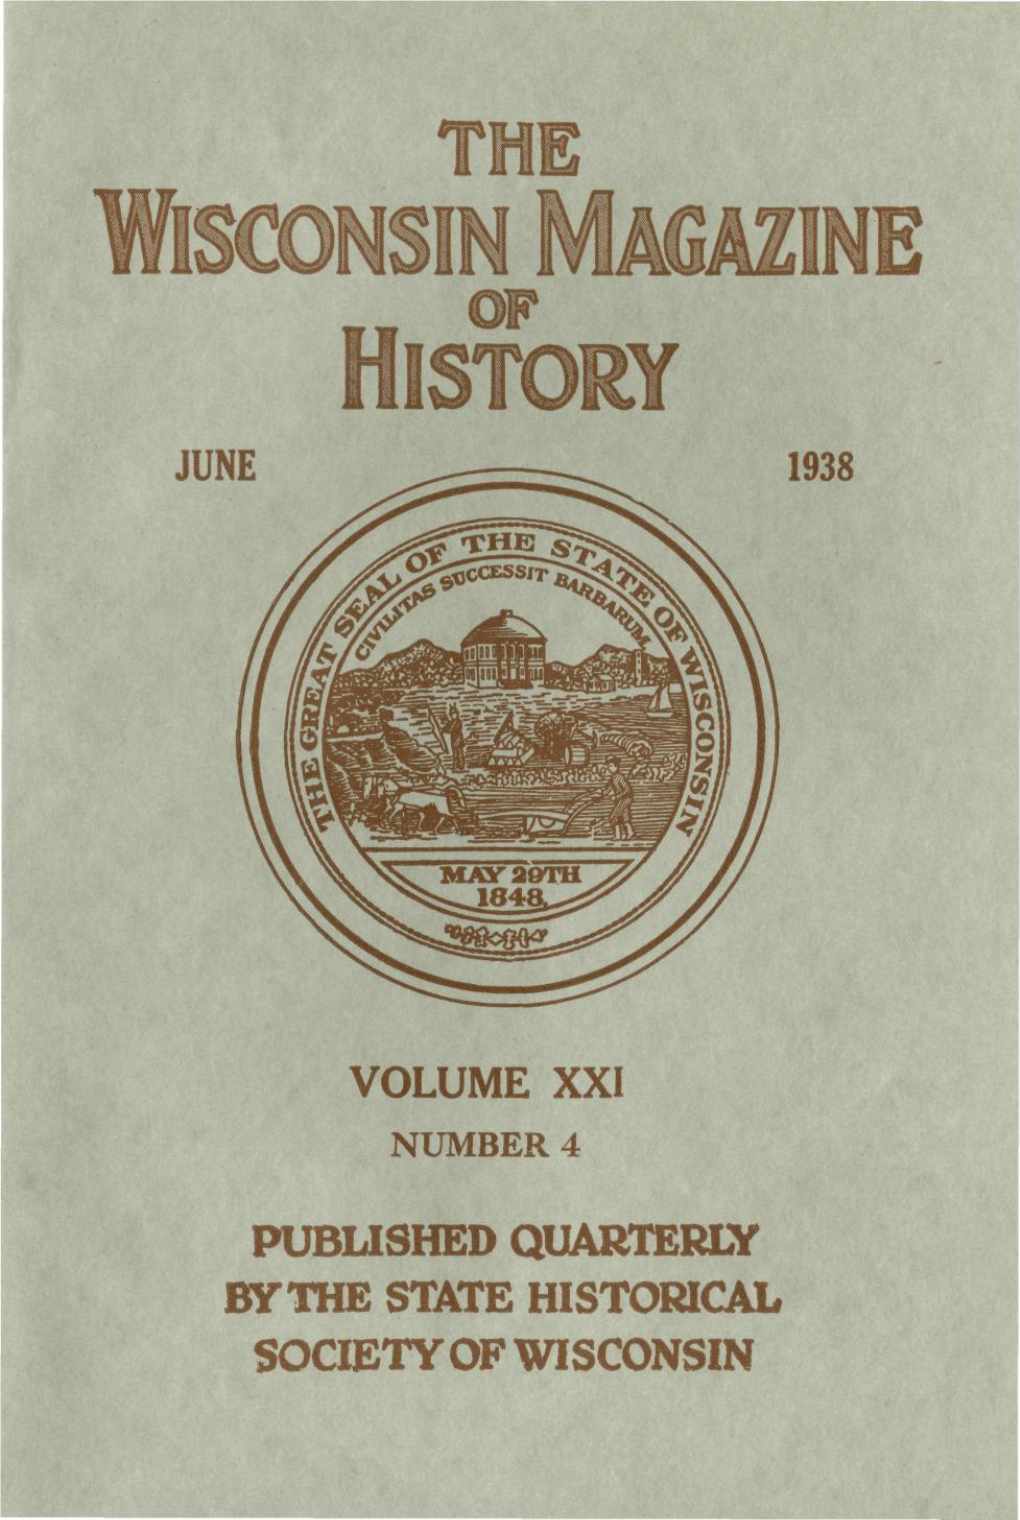 June 1938 Volume